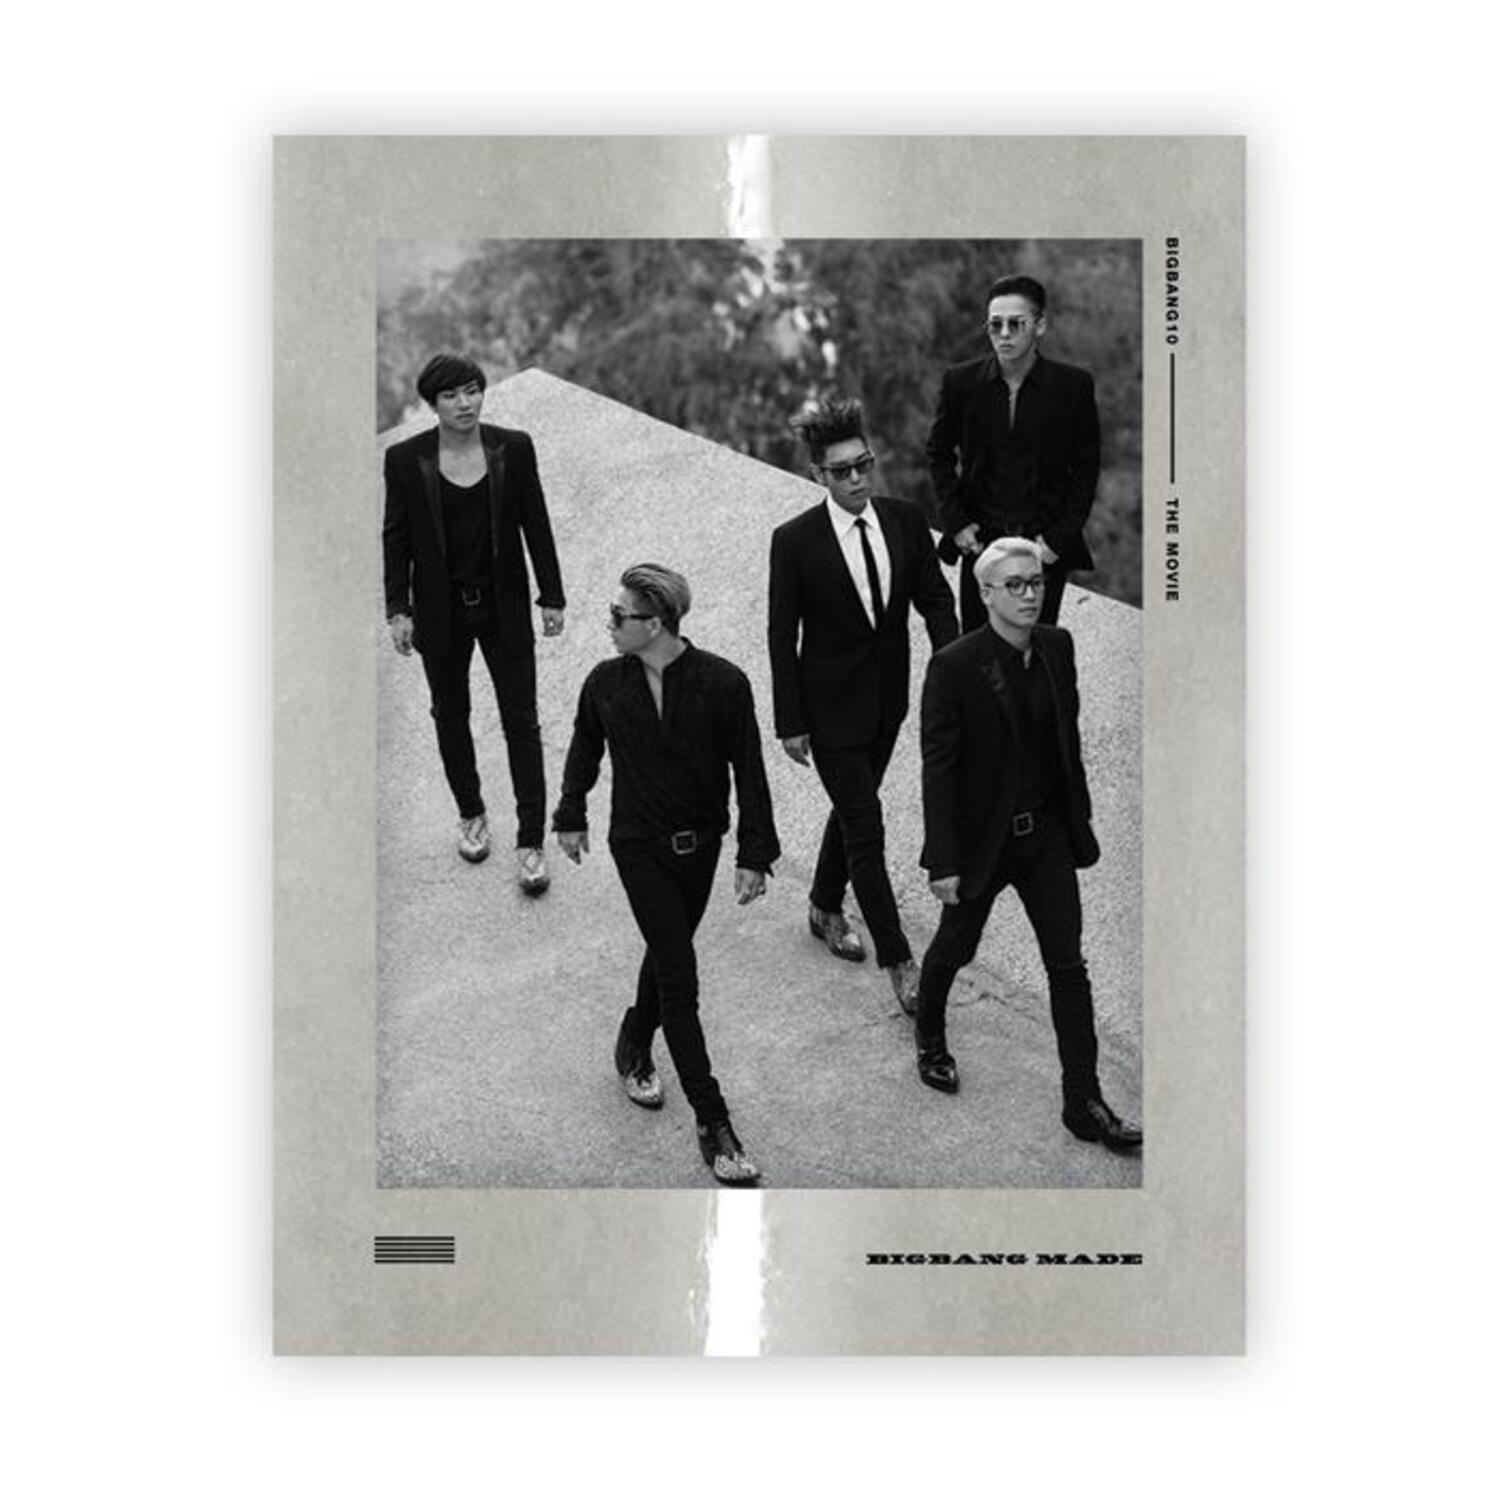 BIGBANG (빅뱅) - BIGBANG10 THE MOVIE BIGBANG MADE Blu-ray FULL PACKAGE BOX -LIMITED EDITION-